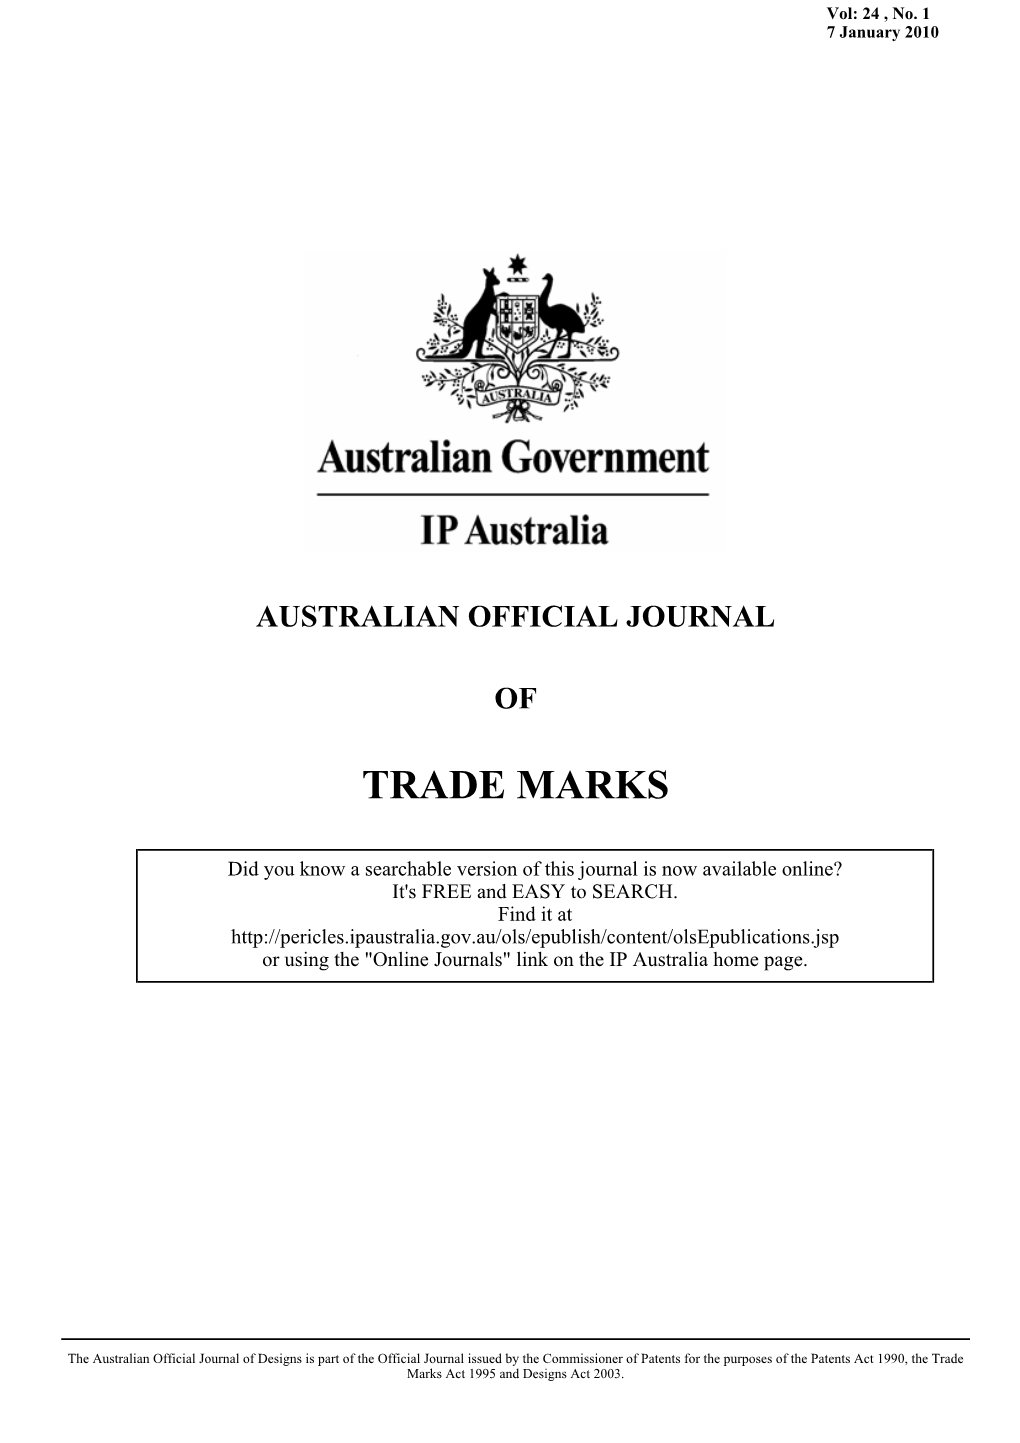 AUSTRALIAN OFFICIAL JOURNAL of TRADE MARKS 7 January 2010